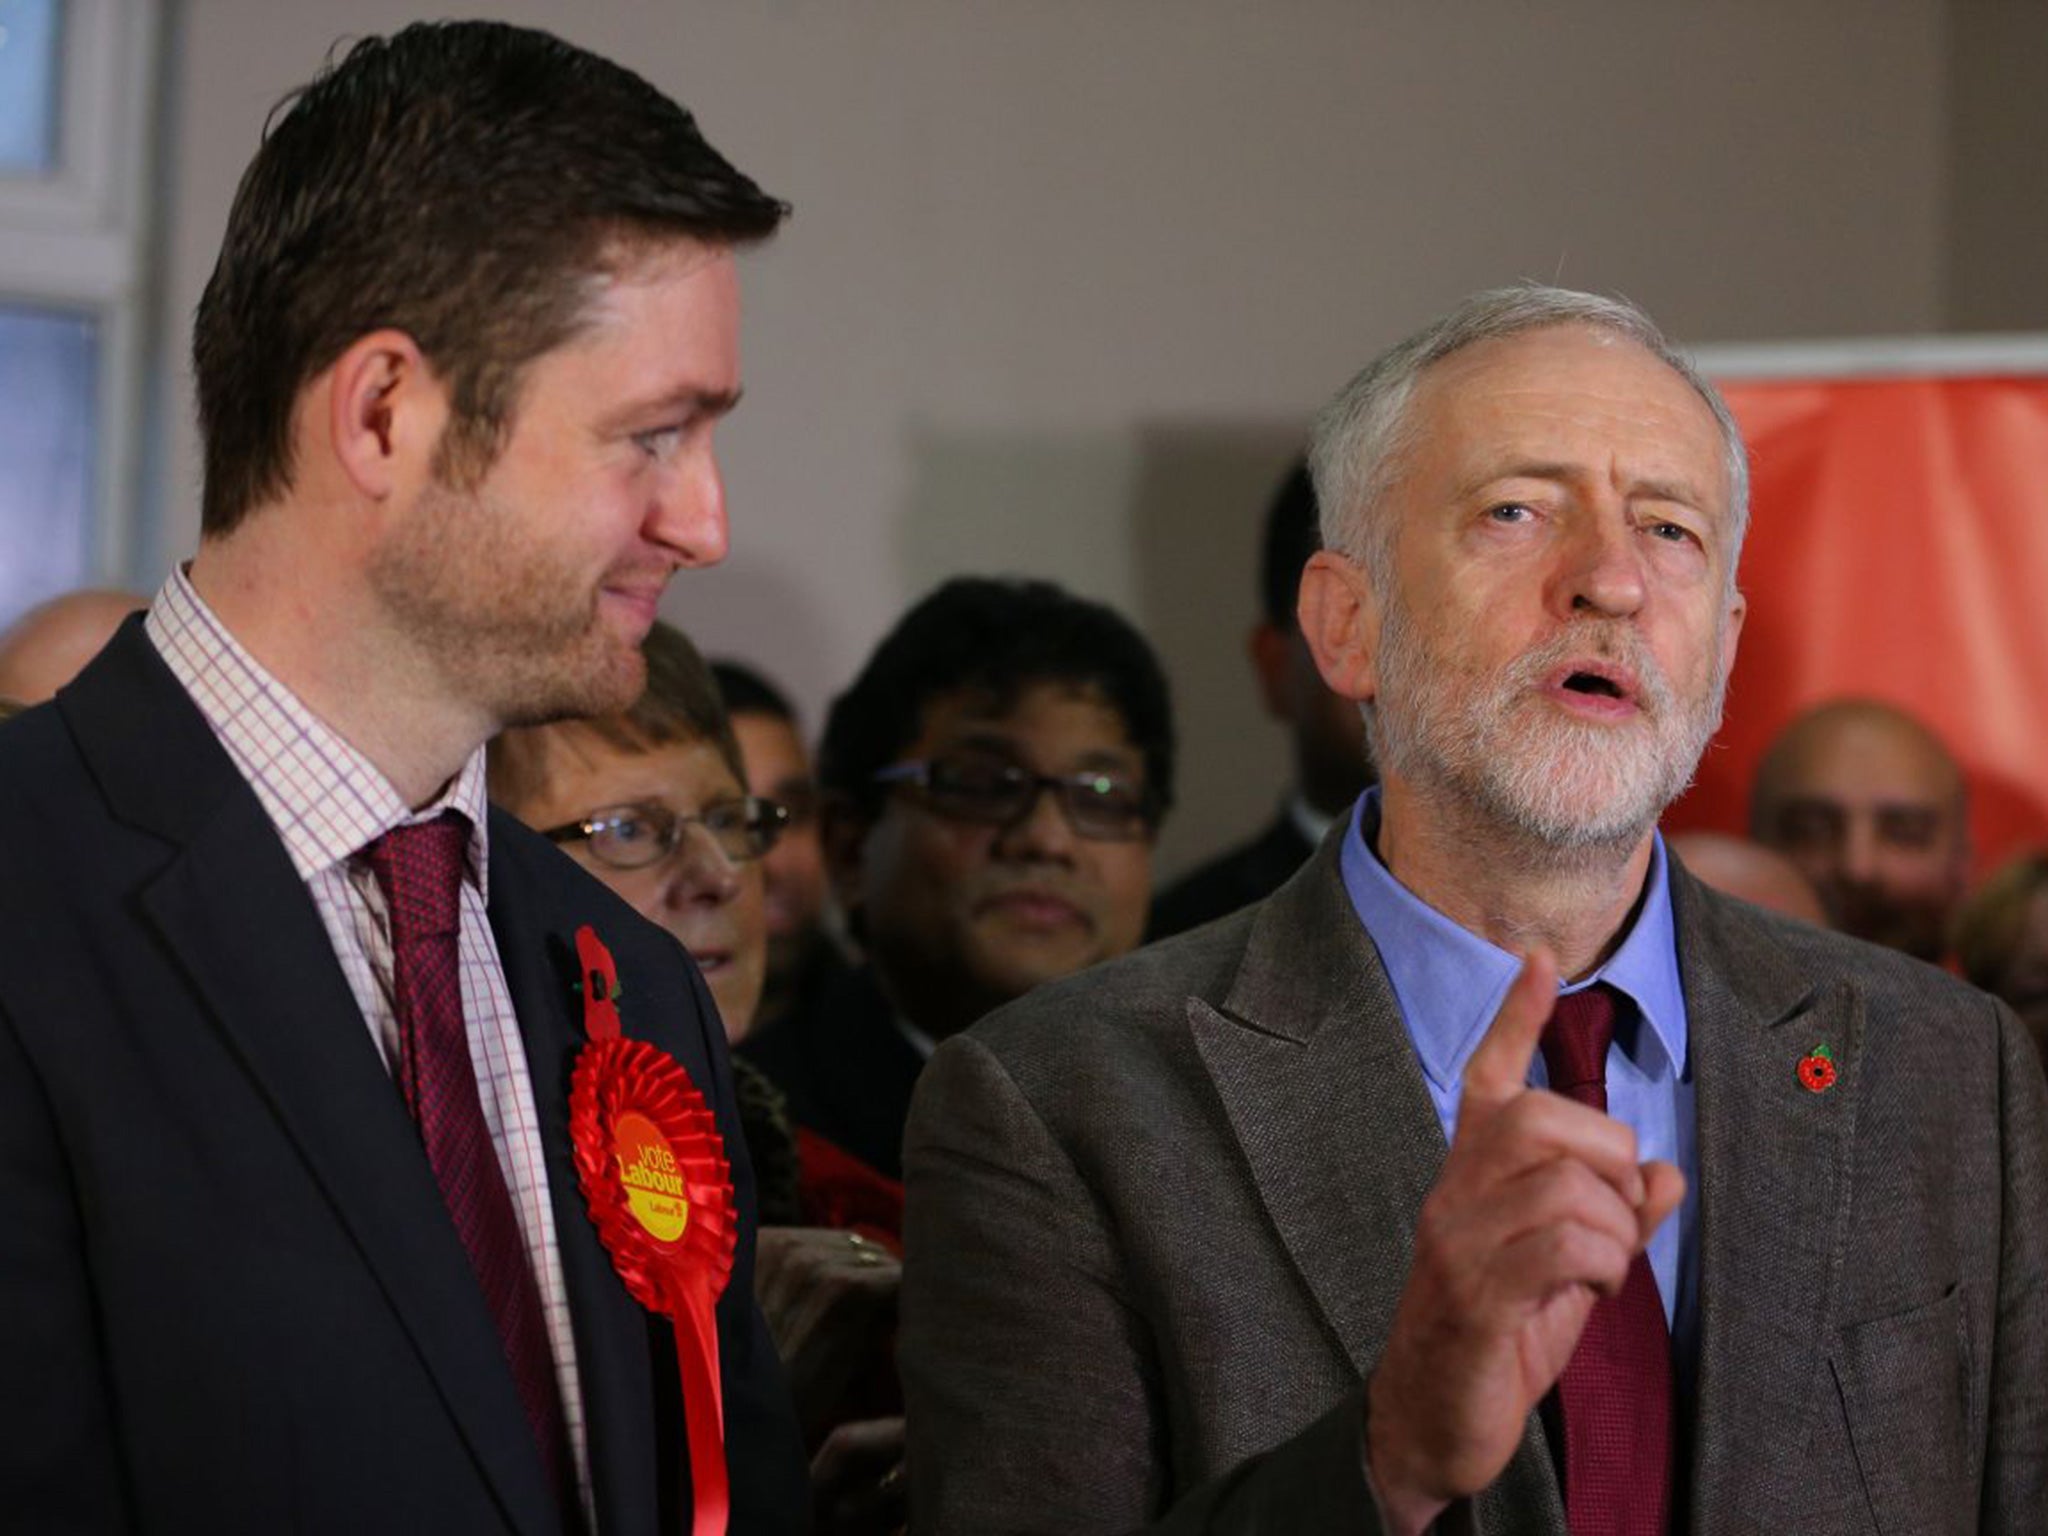 Labour party leader Jeremy Corbyn stands alongside Labour candidate Jim McMahon